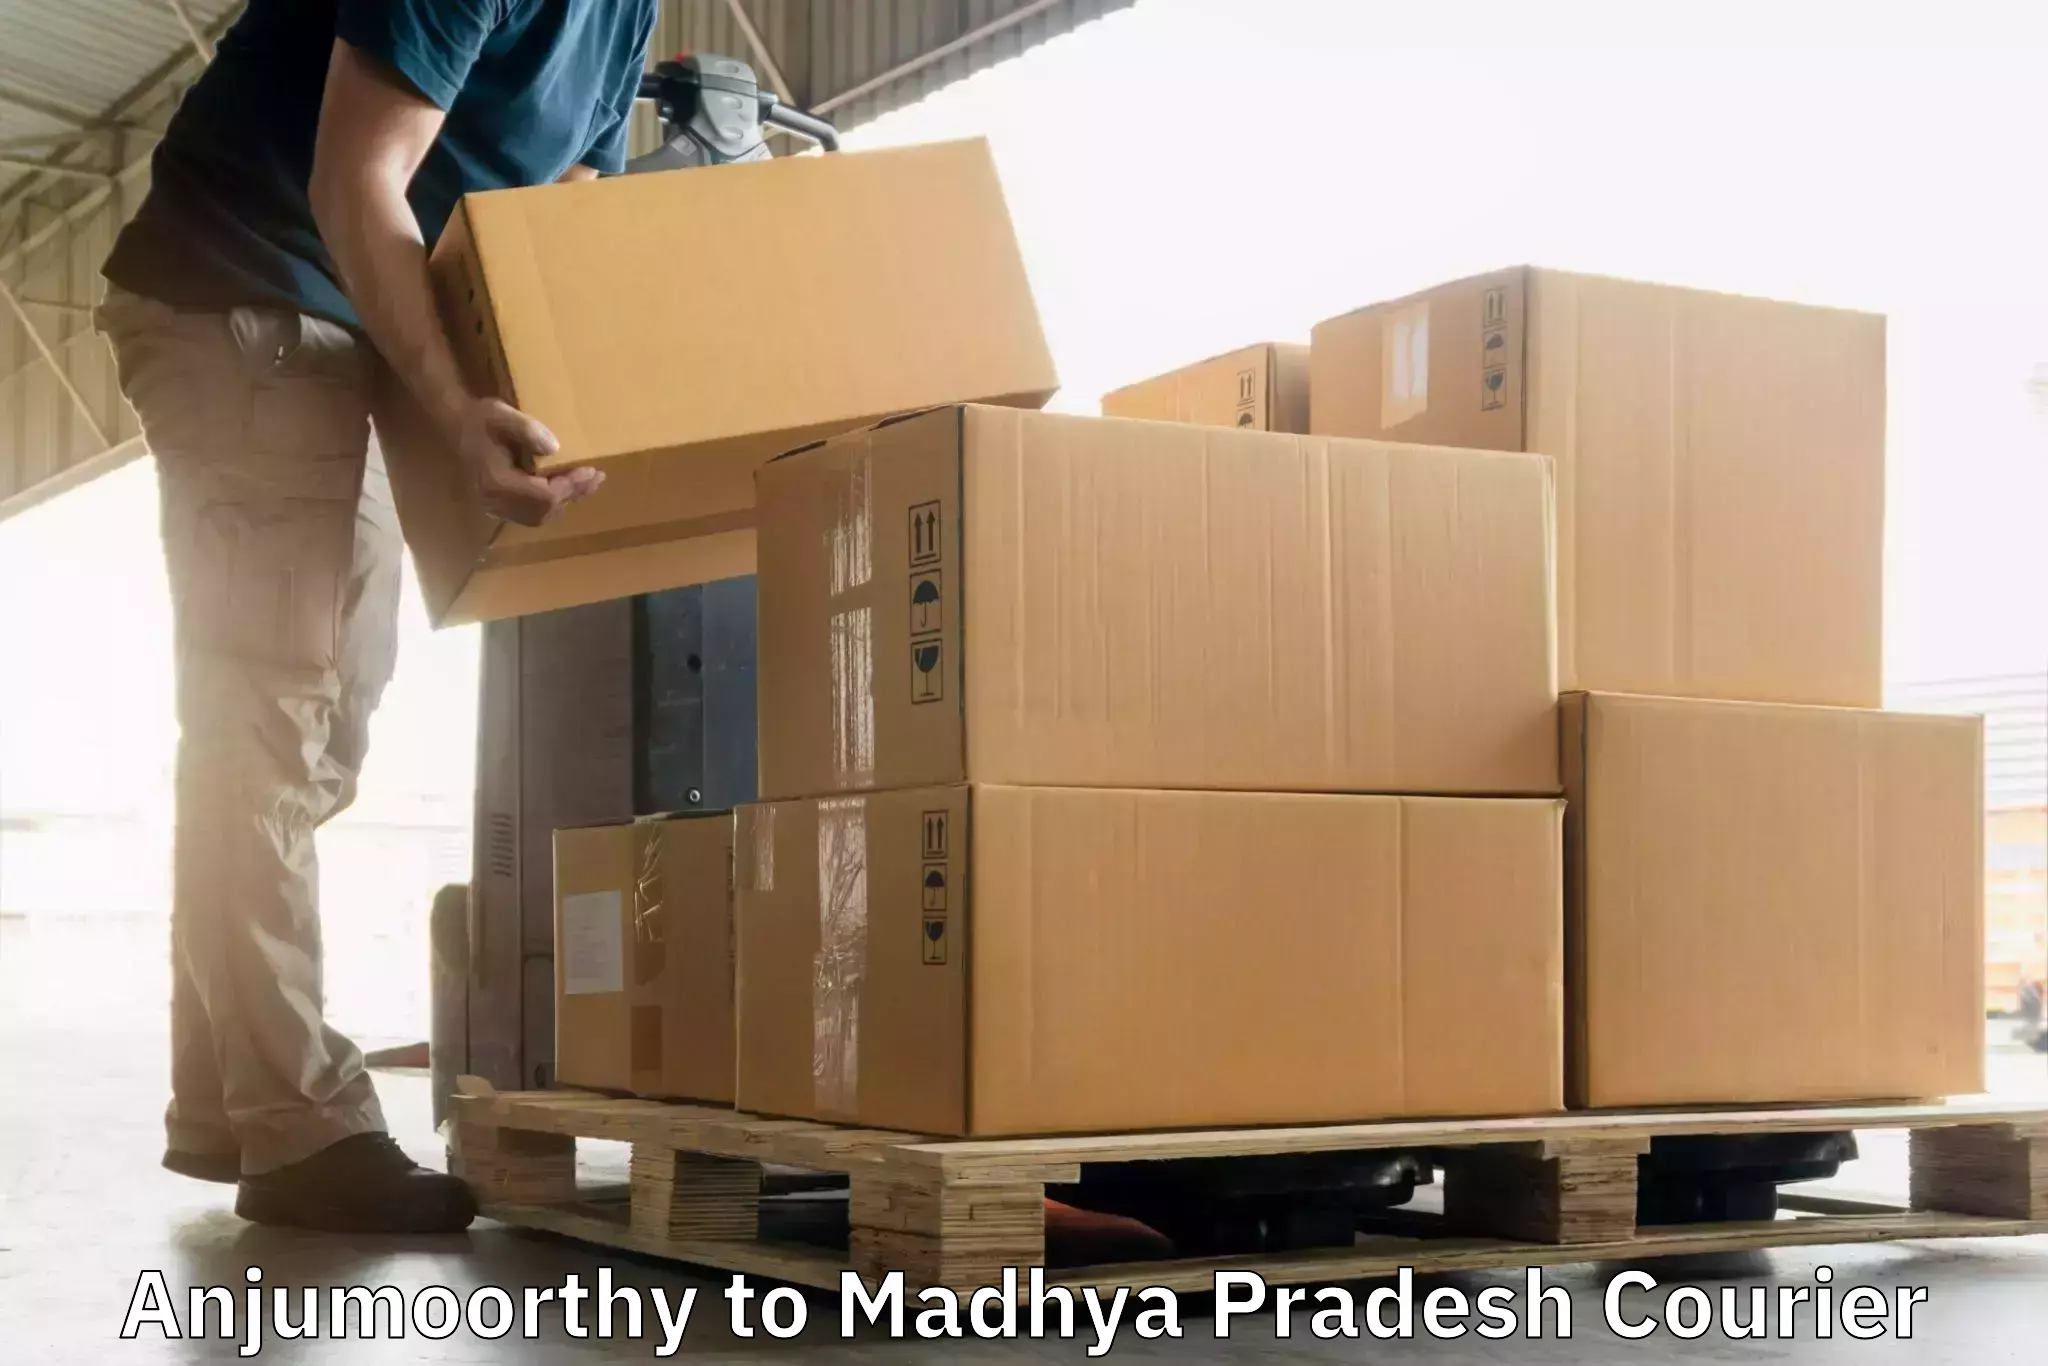 Express delivery capabilities Anjumoorthy to Madhya Pradesh